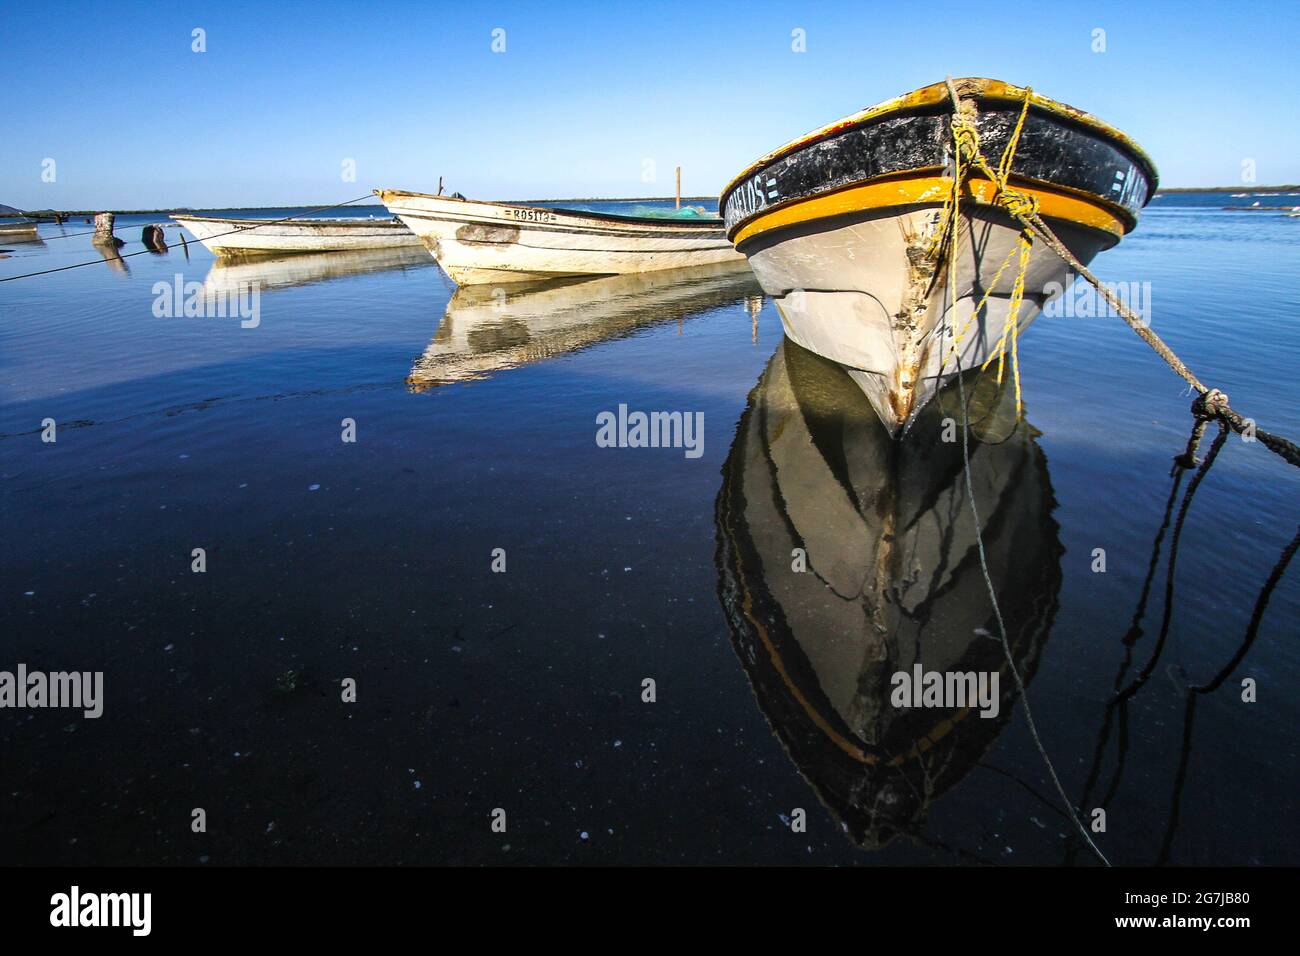 Fishing boat or panga de pescador in the estuary of Bahia de Kino